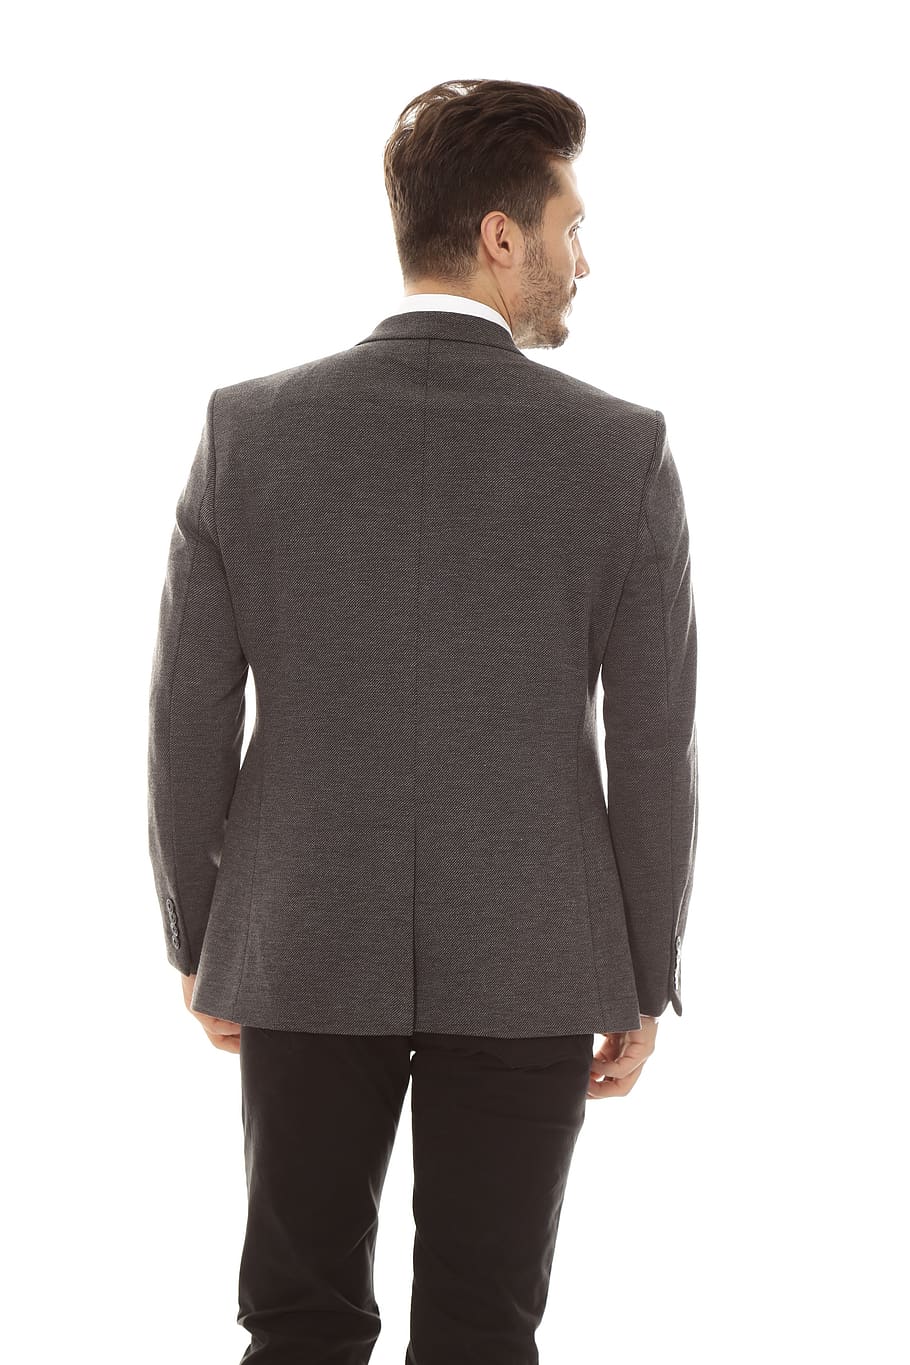 jacket, male, rear, back, pose, model, man, people, person, fashion